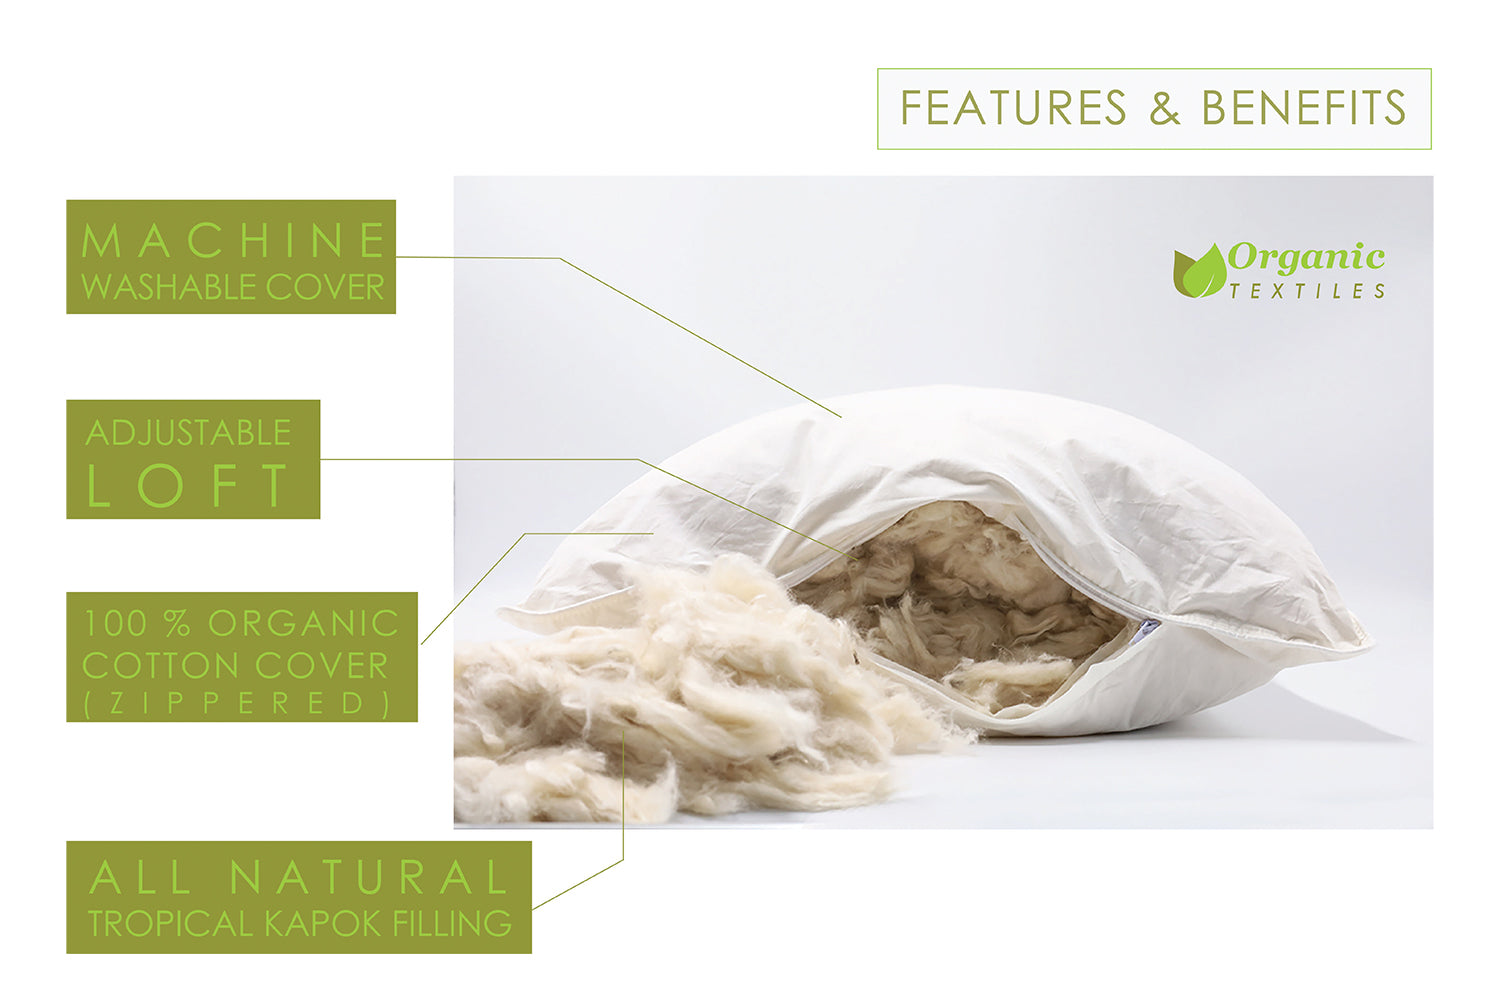 Organic 100% Kapok Fiber For Pillows, Toys, Cushion Stuffing (1-lb.) –  Rawganique